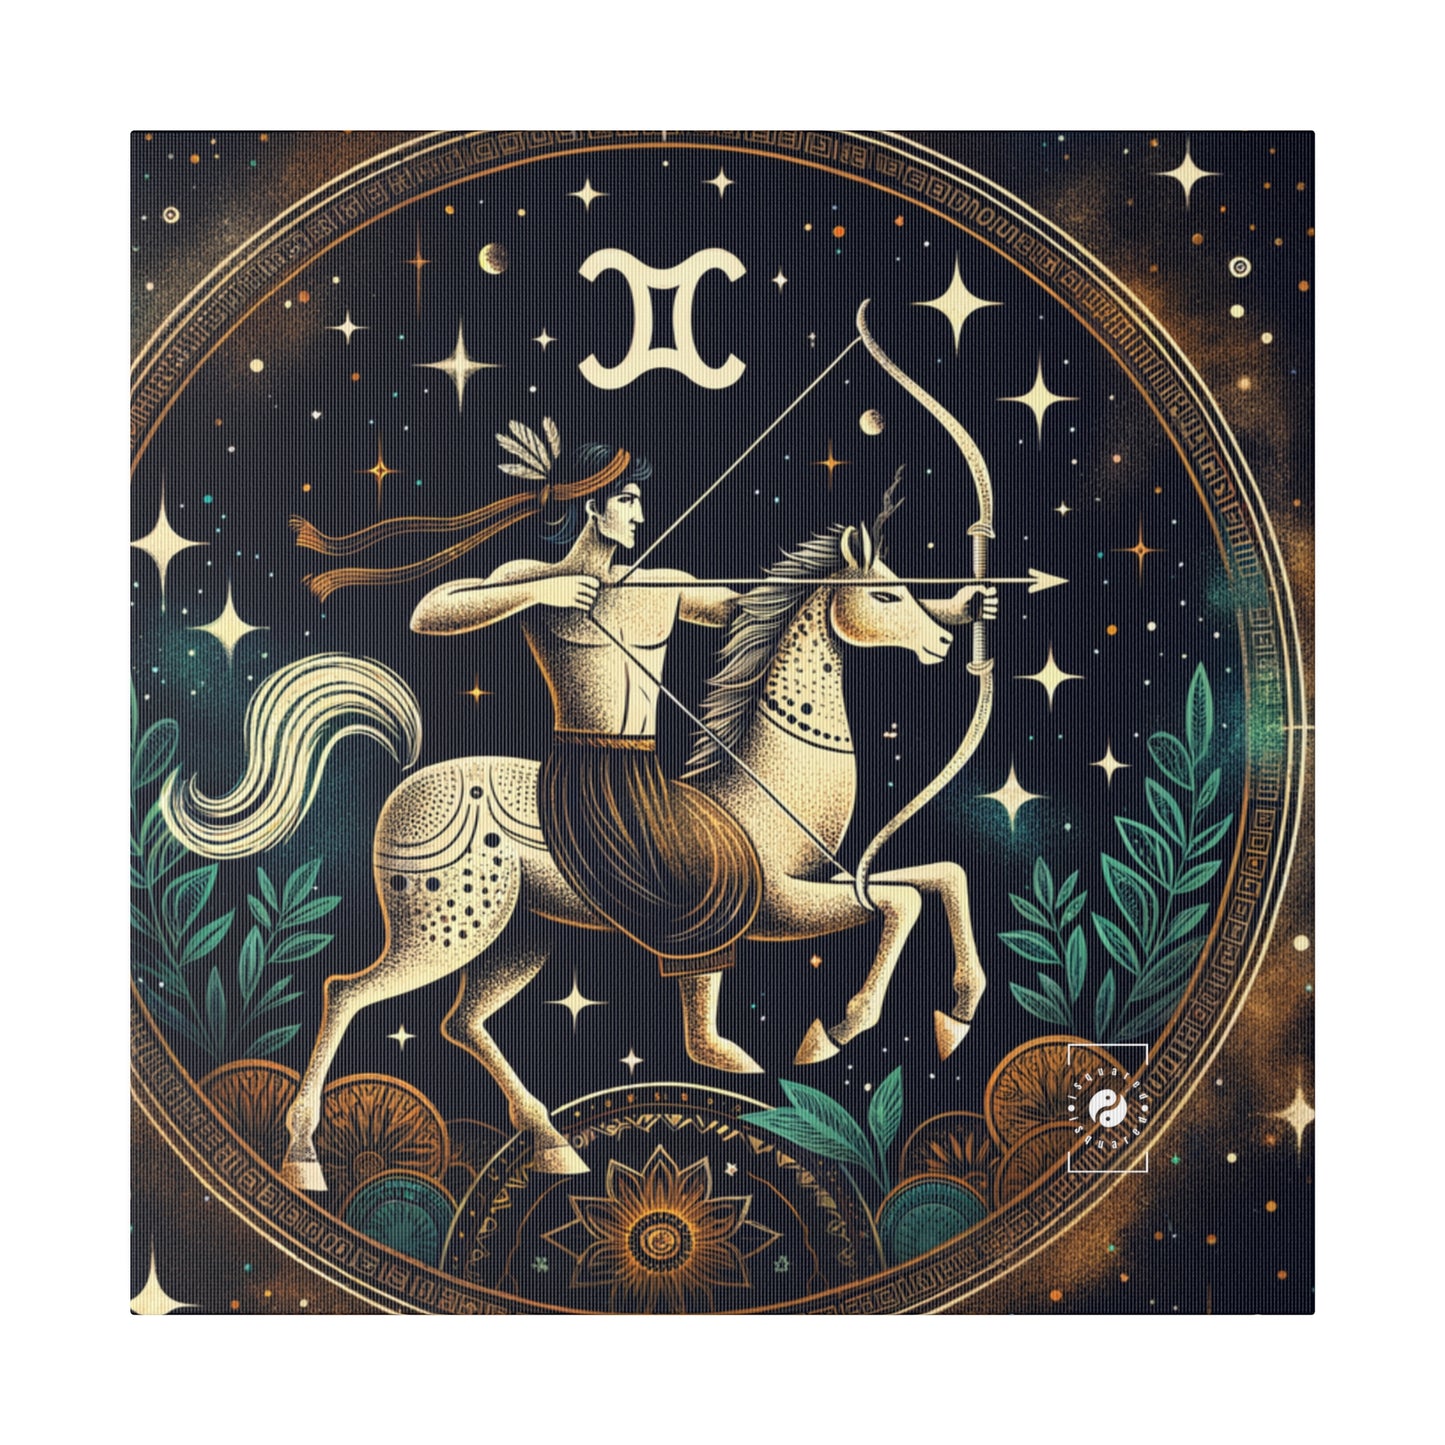 Sagittarius Emblem - Art Print Canvas